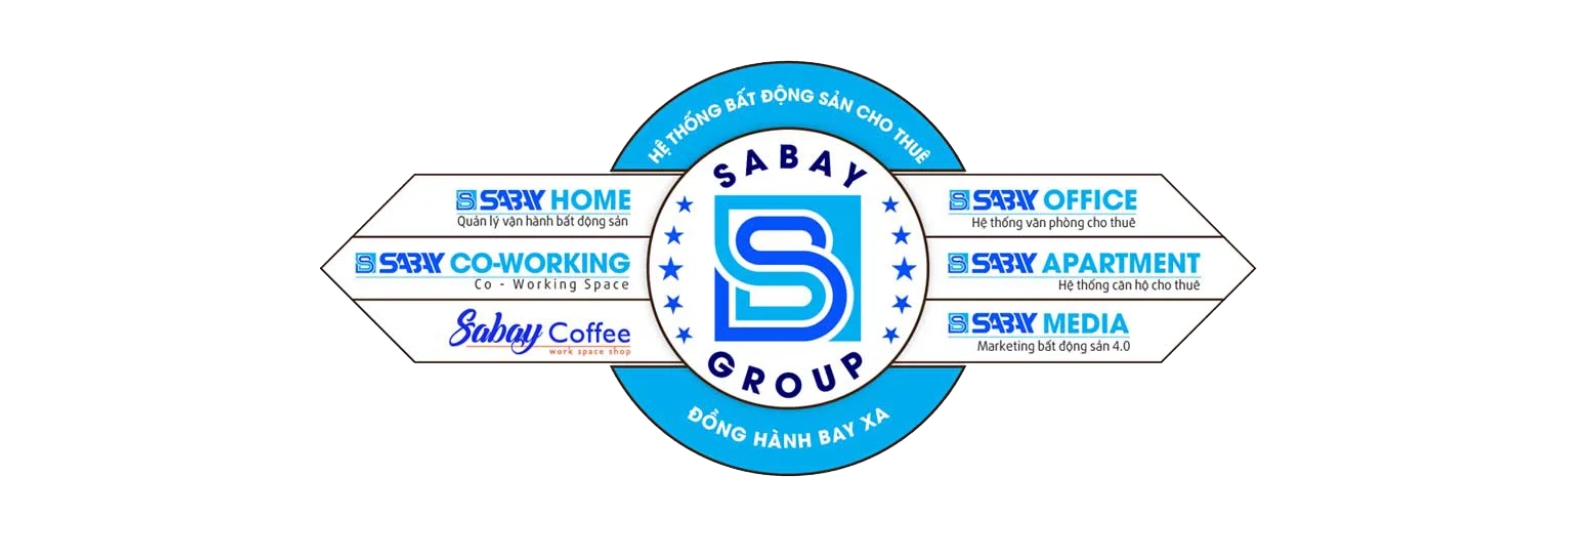 Hình bìa Sabay